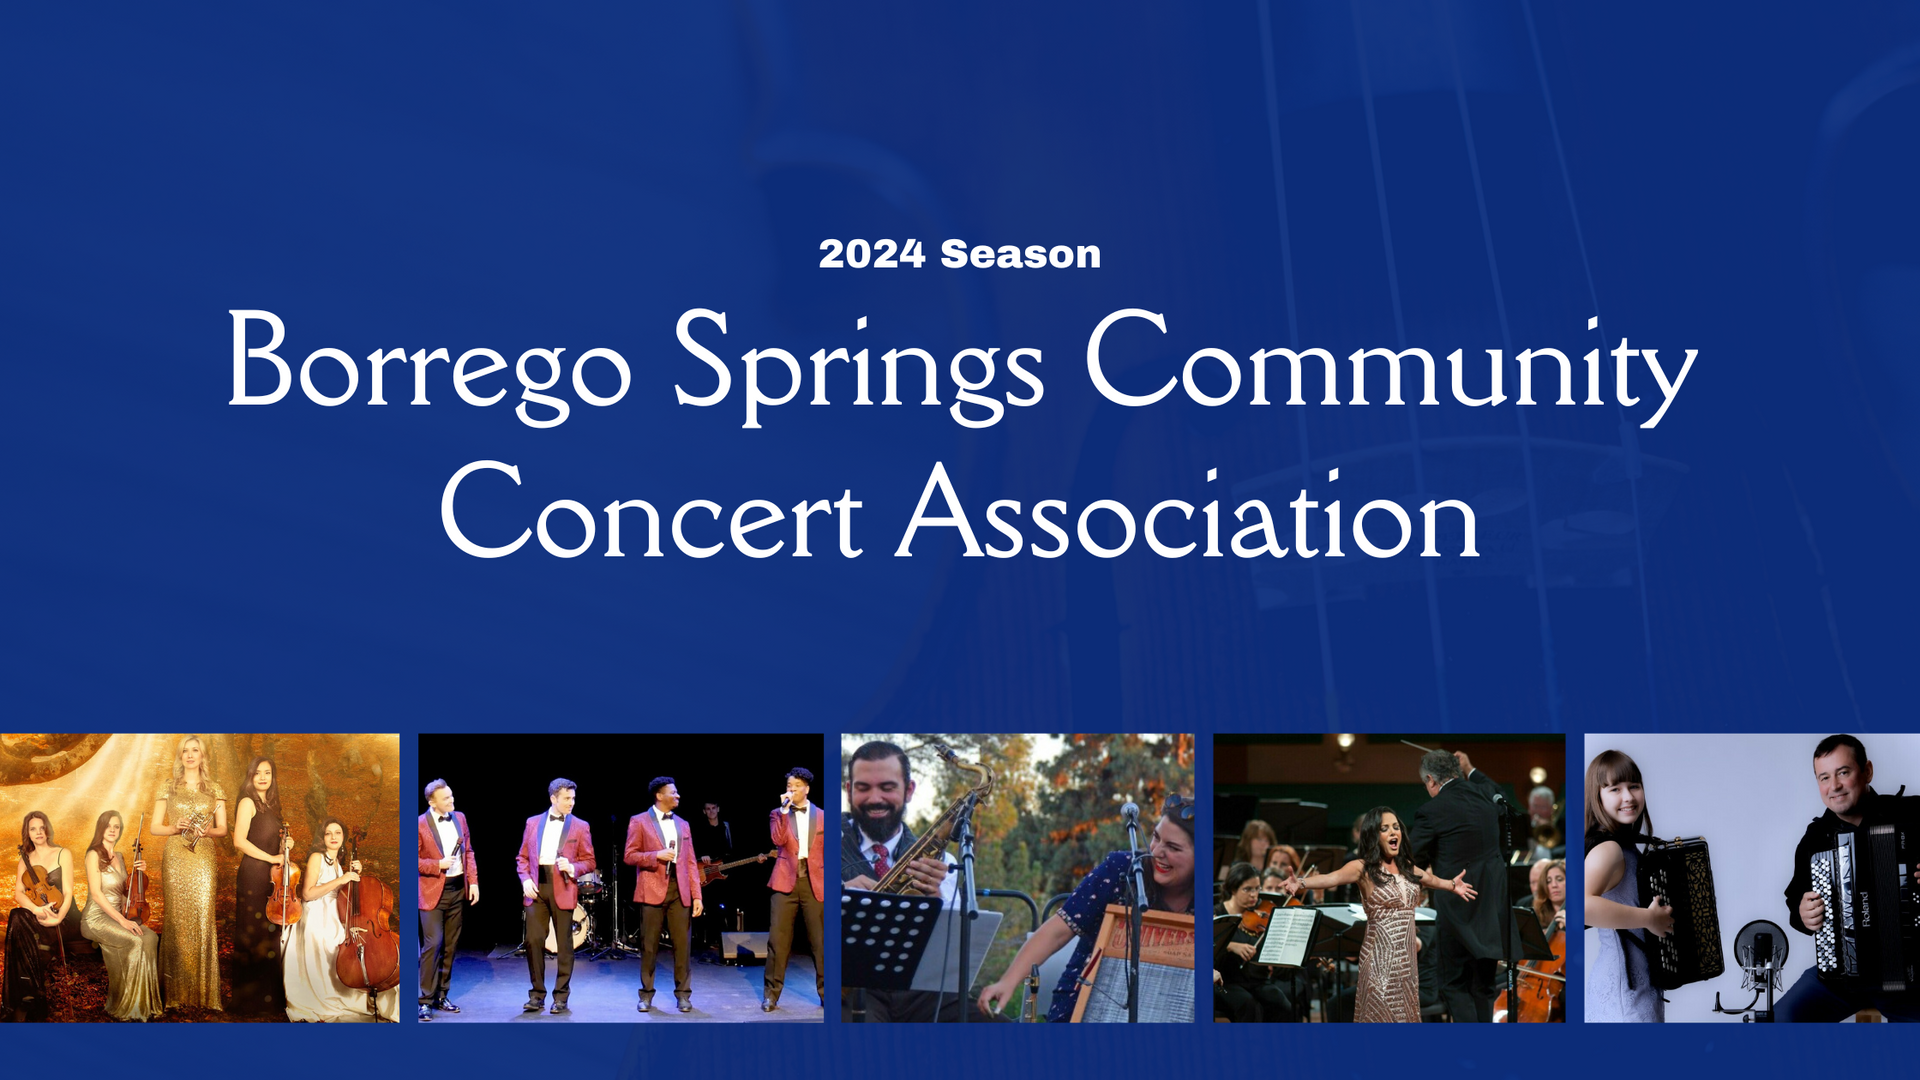 Borrego Springs Community Concert Association’s 49th season